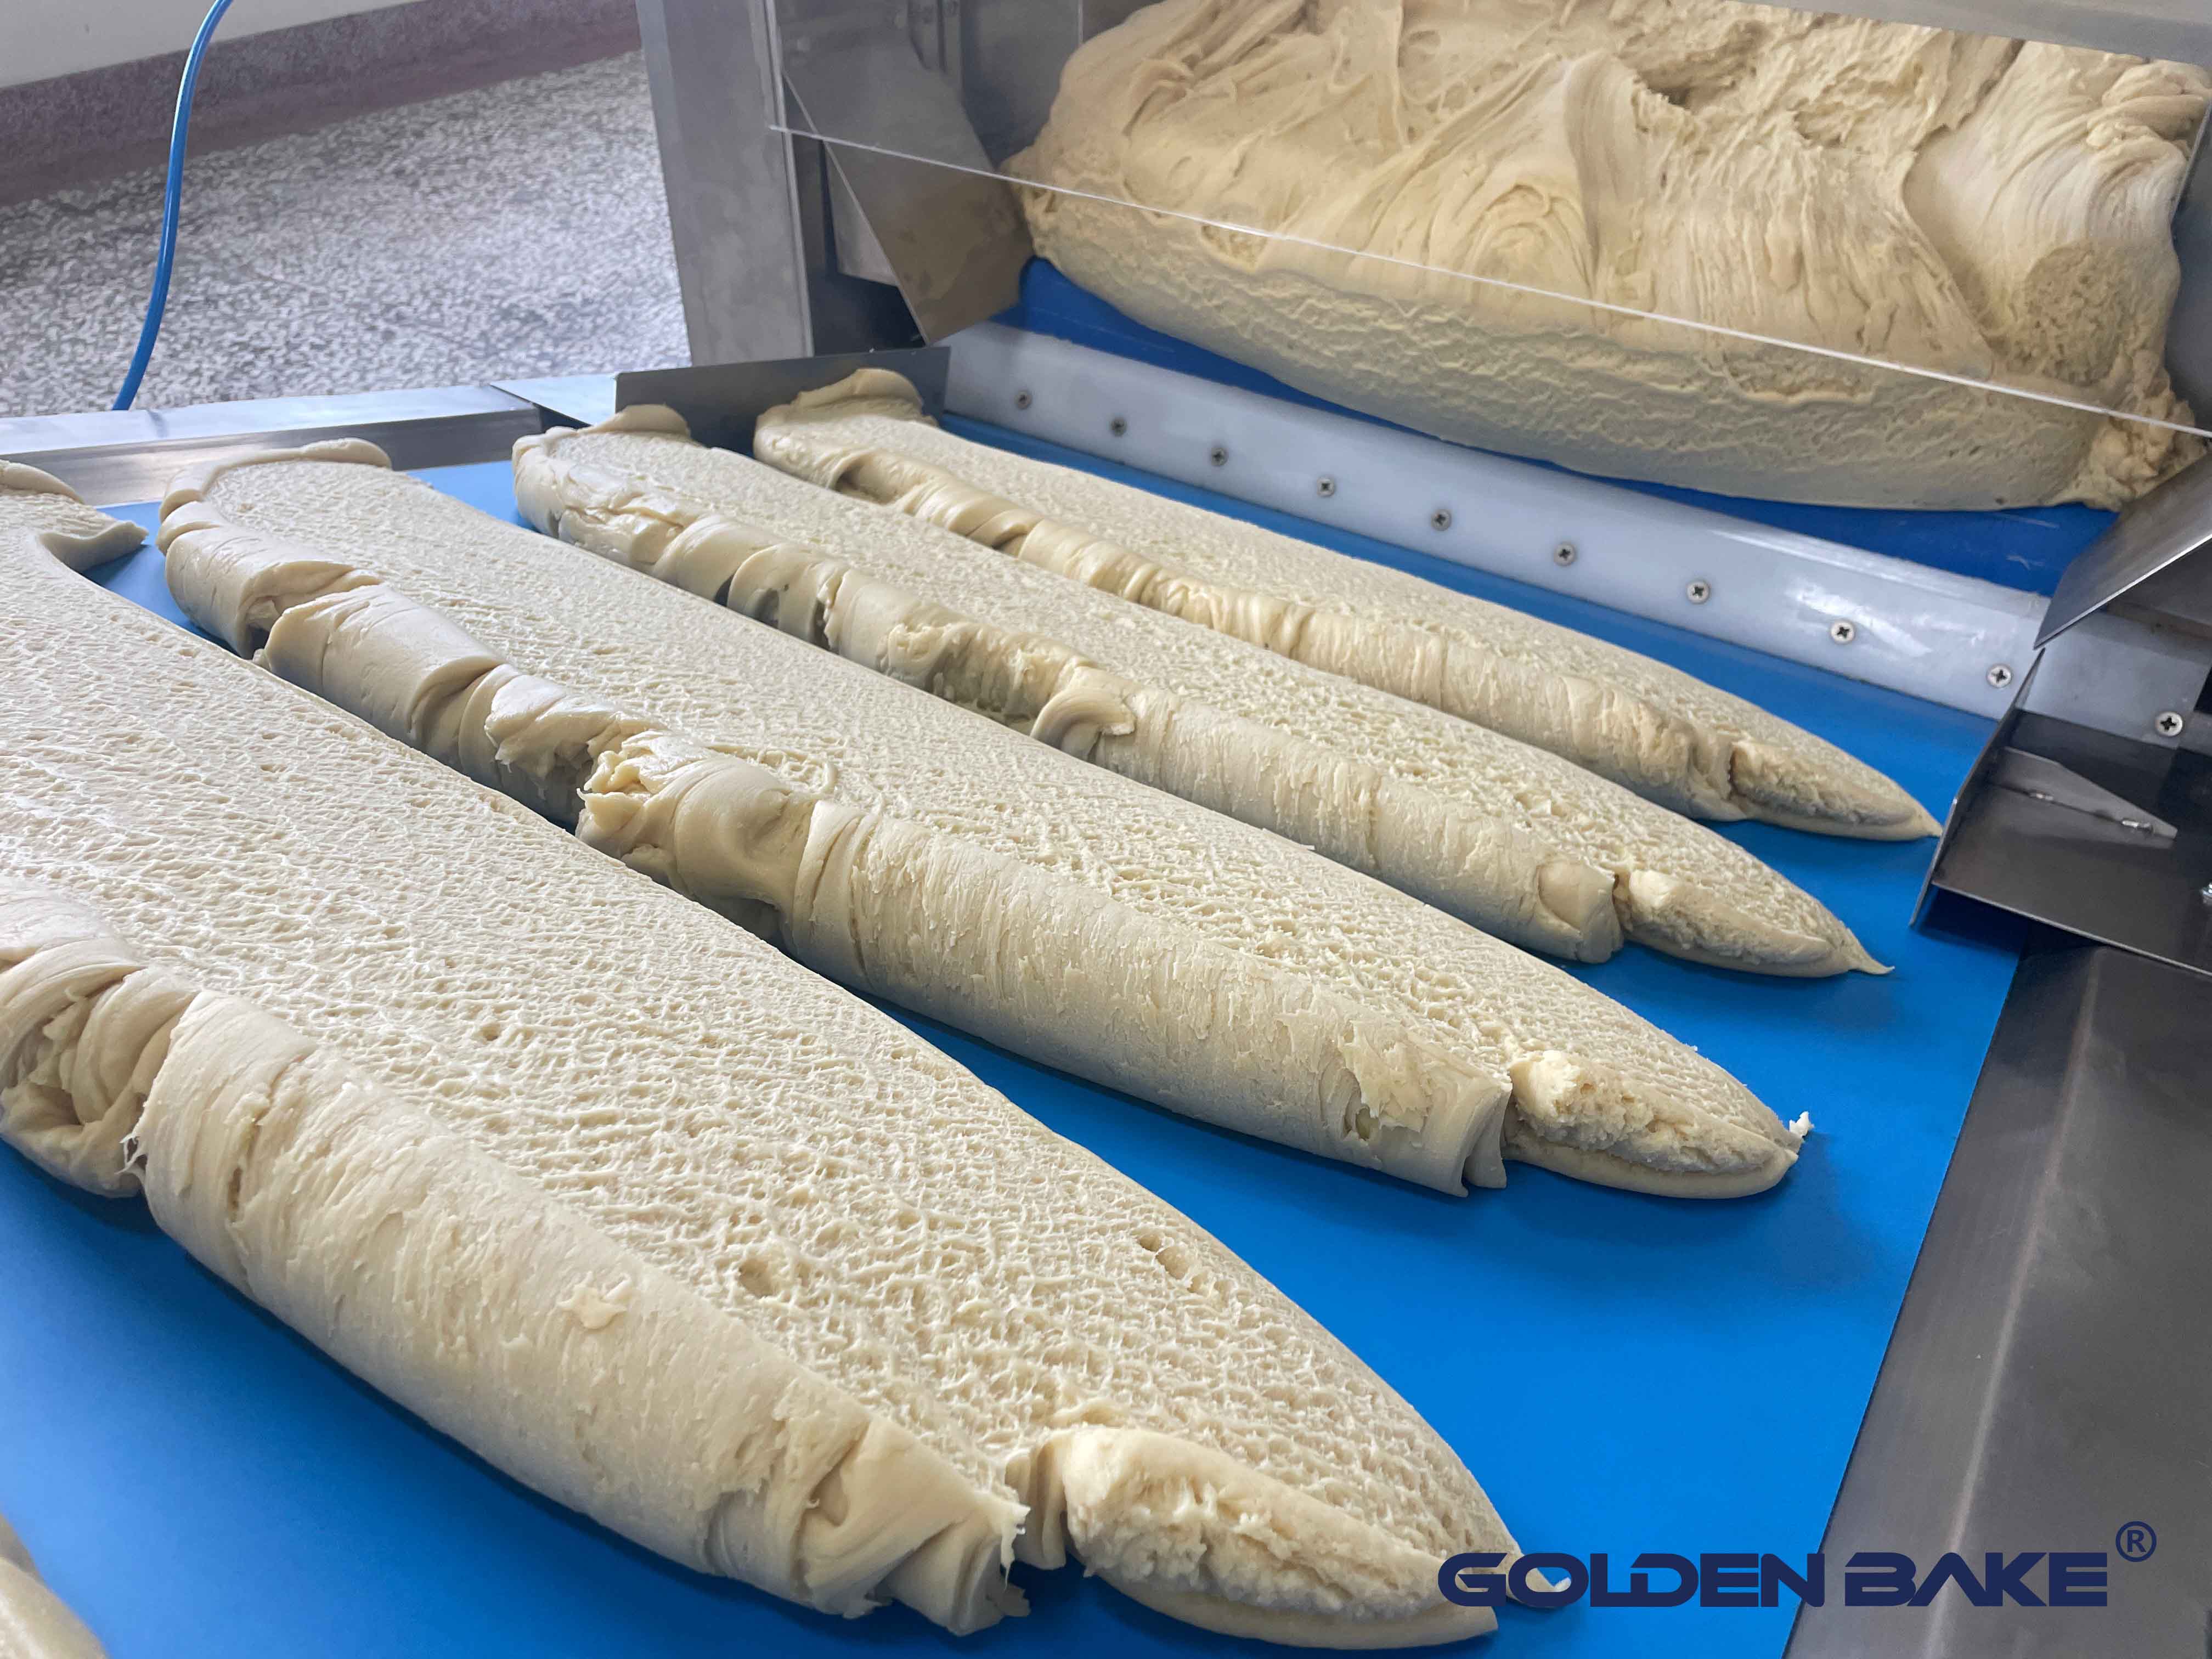 Golden Bake dough handling equipment manufacturer for forming the dough-1